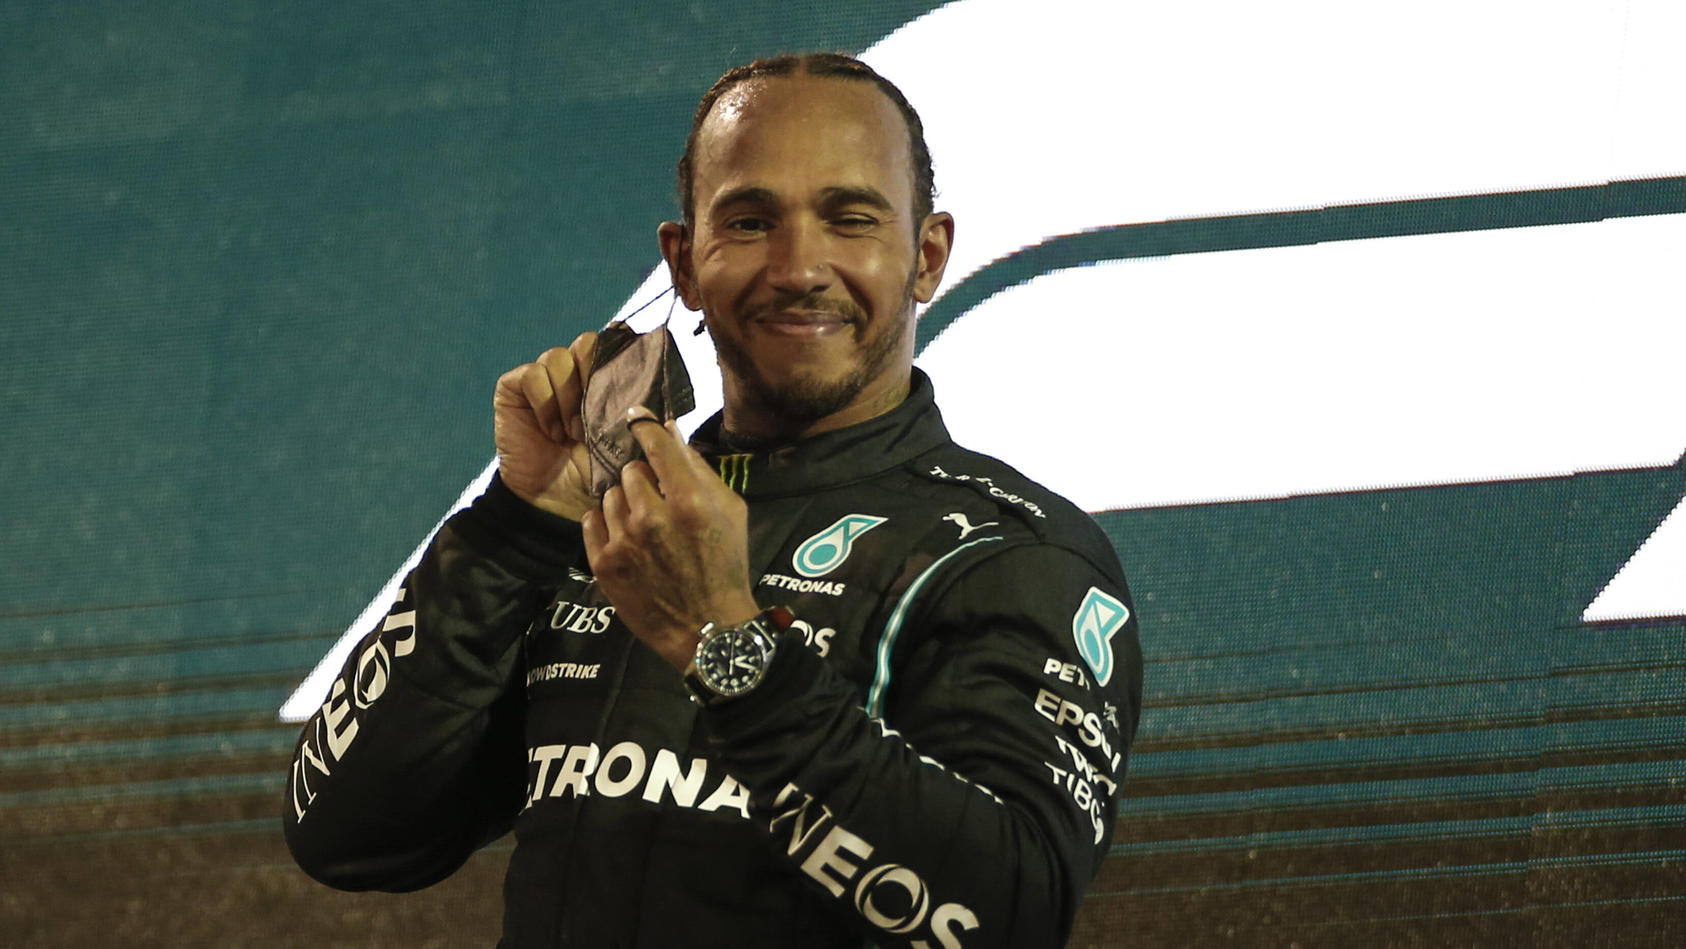 44 Lewis Hamilton (GBR, Mercedes-AMG Petronas F1 Team), F1 Grand Prix of Bahrain at Bahrain International Circuit on Ma